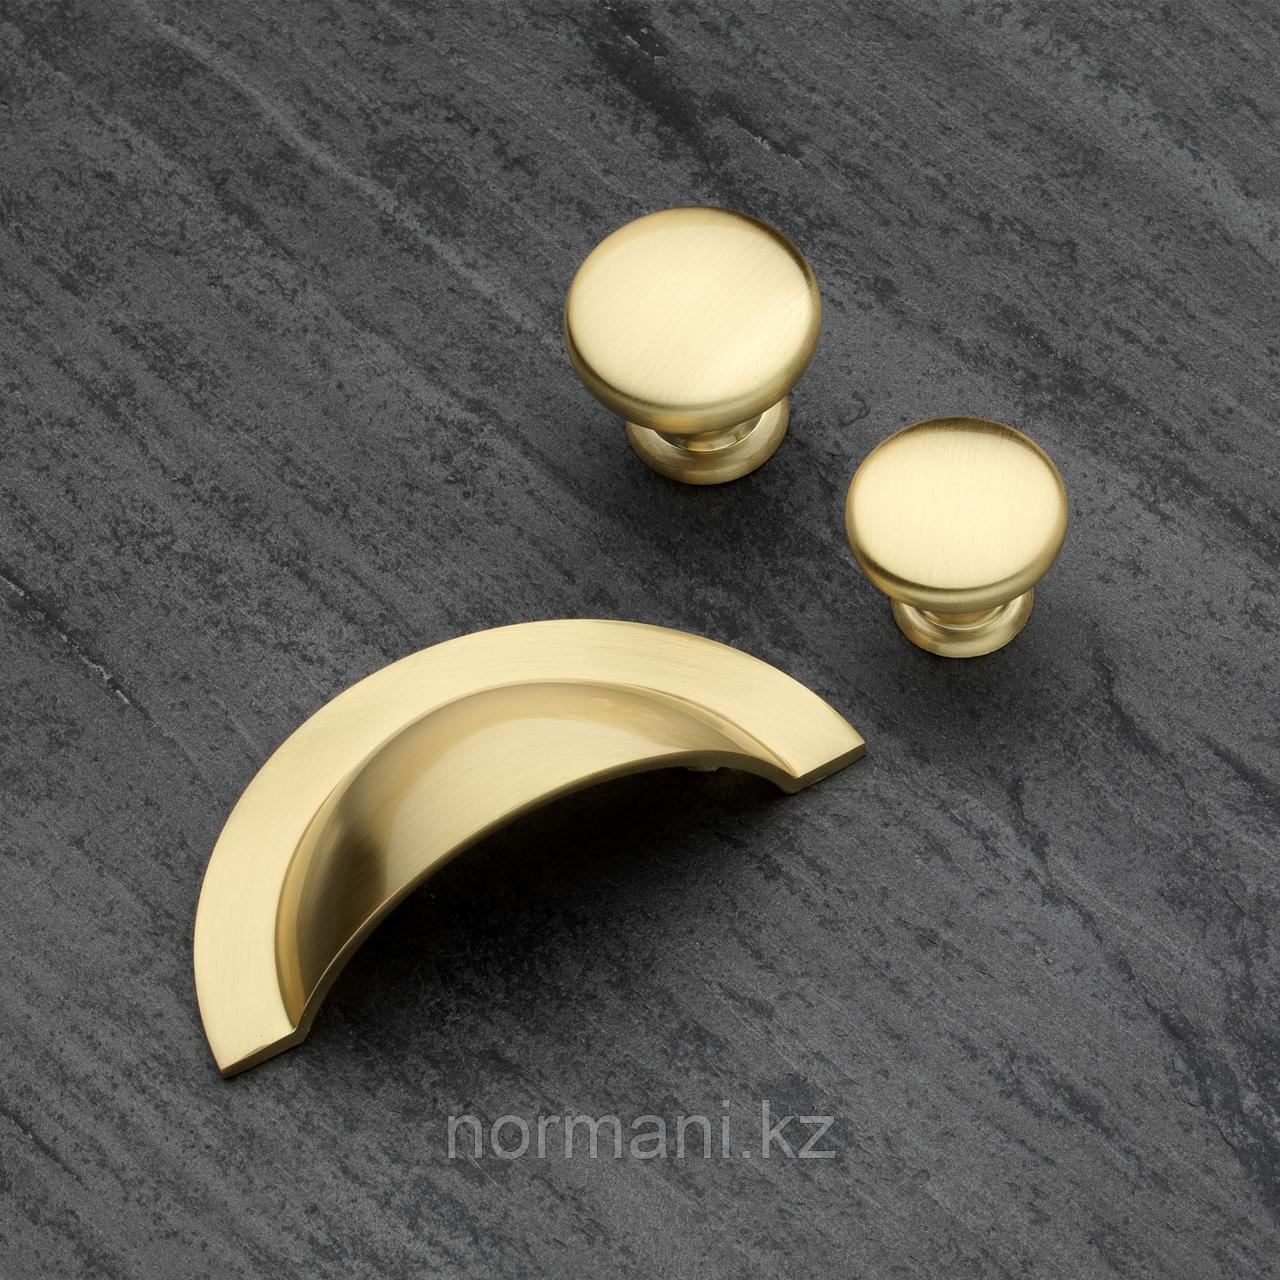 Ручка кнопка диаметр 32 мм, отделка золото матовое, фото 1